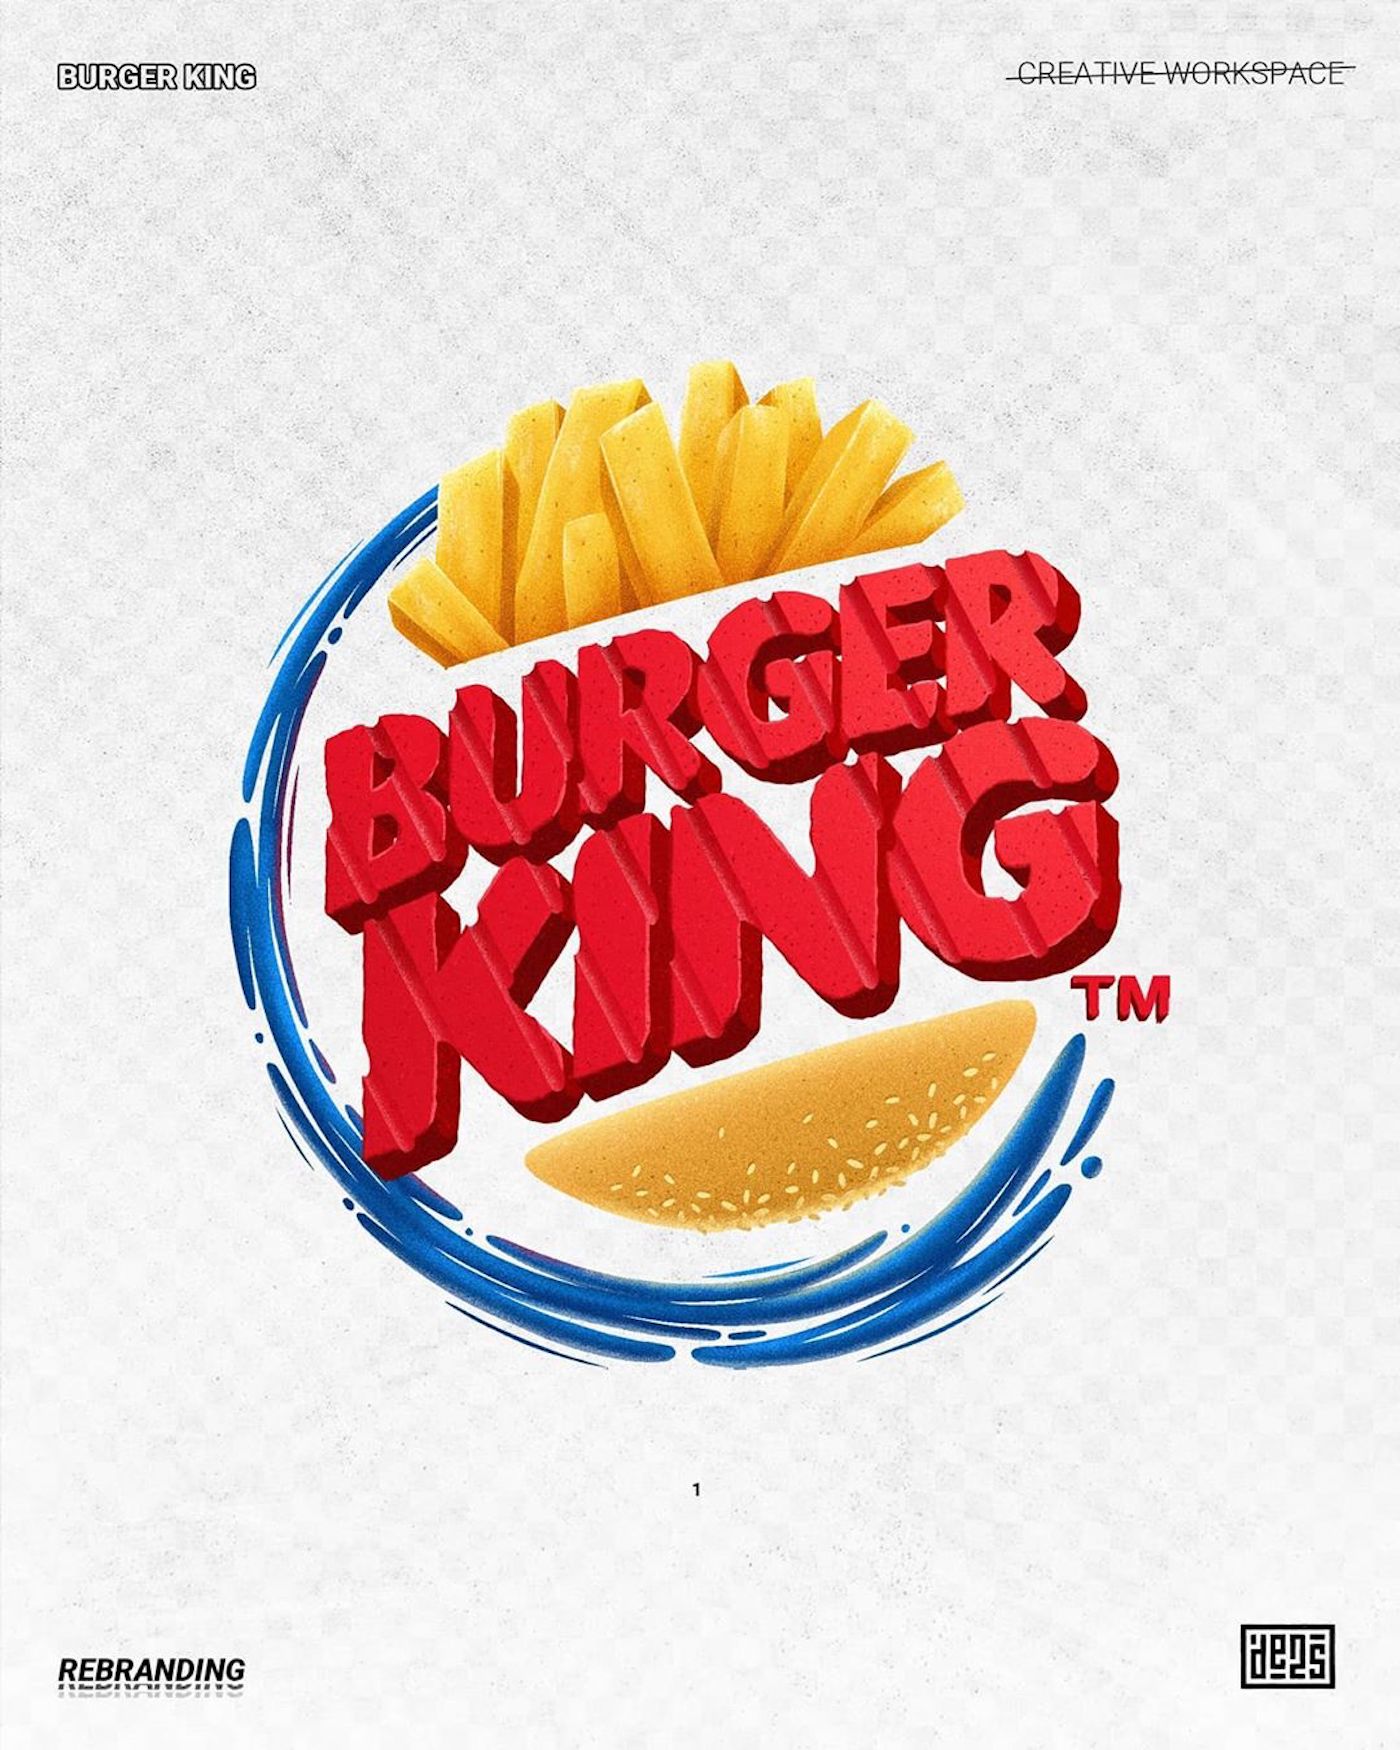 Logo de Burger King rebrandé par de2s